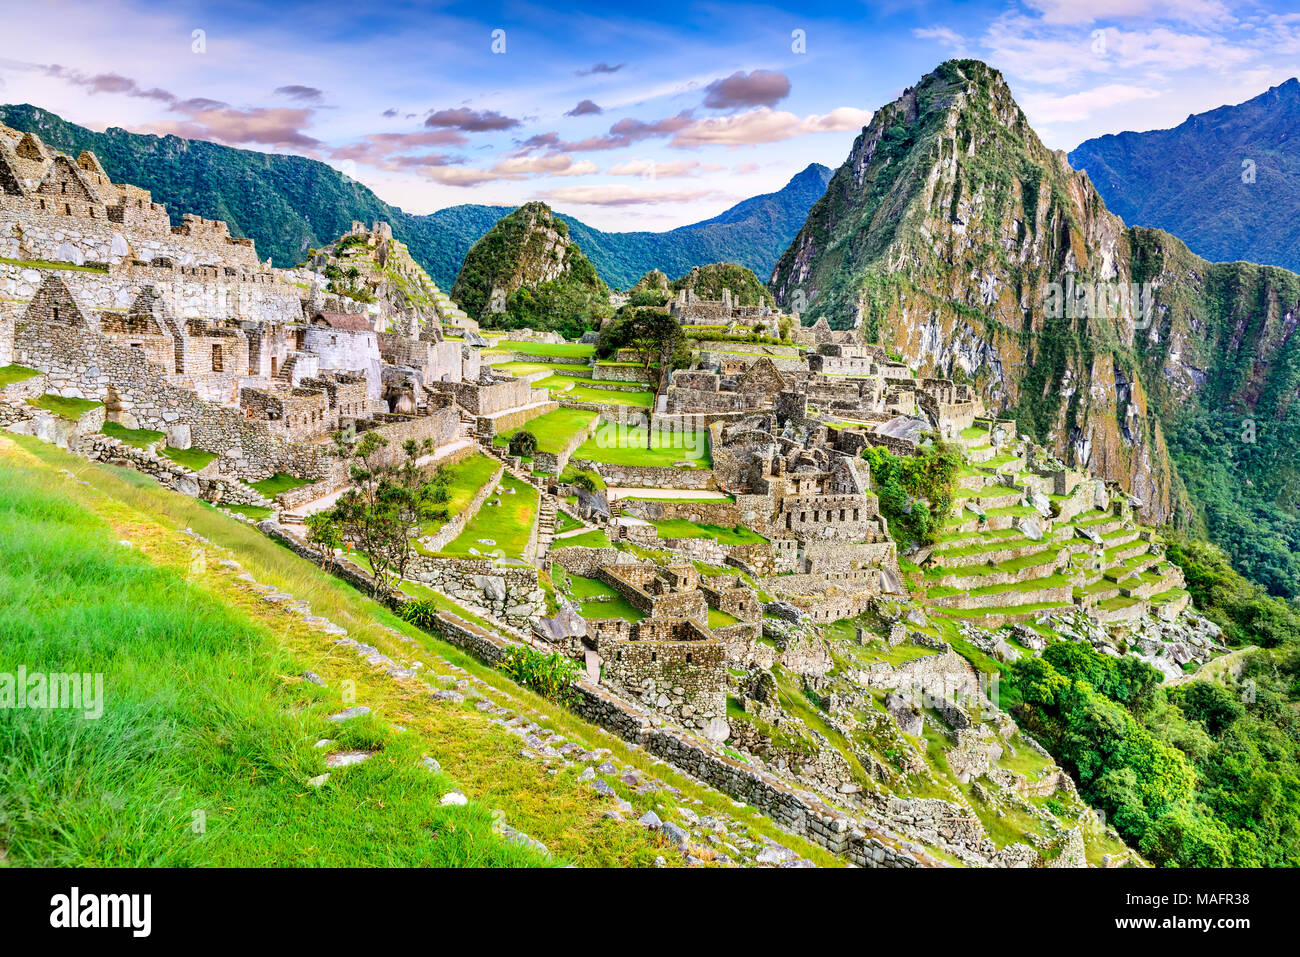 Machu Picchu in Peru - Ruins of Inca Empire city and Huaynapicchu Mountain in Sacred Valley, Cusco, South America. Stock Photo